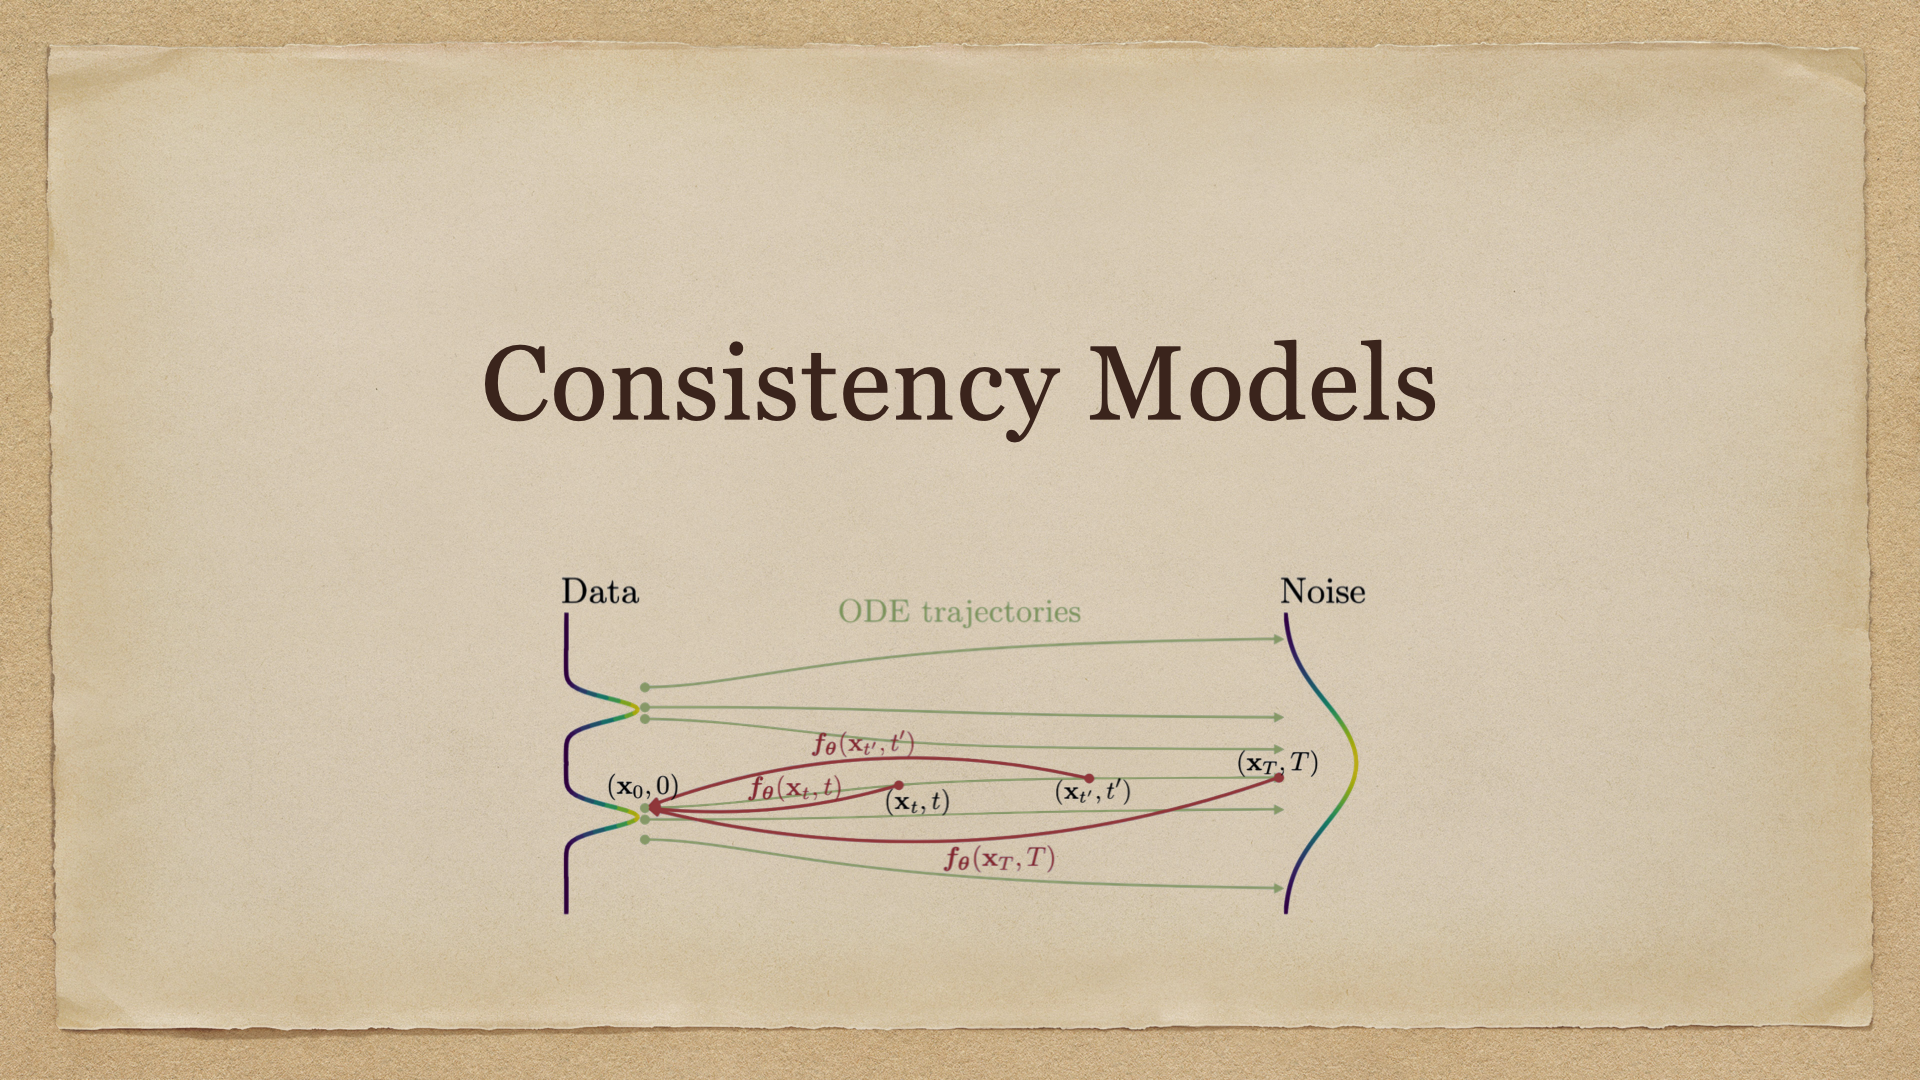 Consistency Models